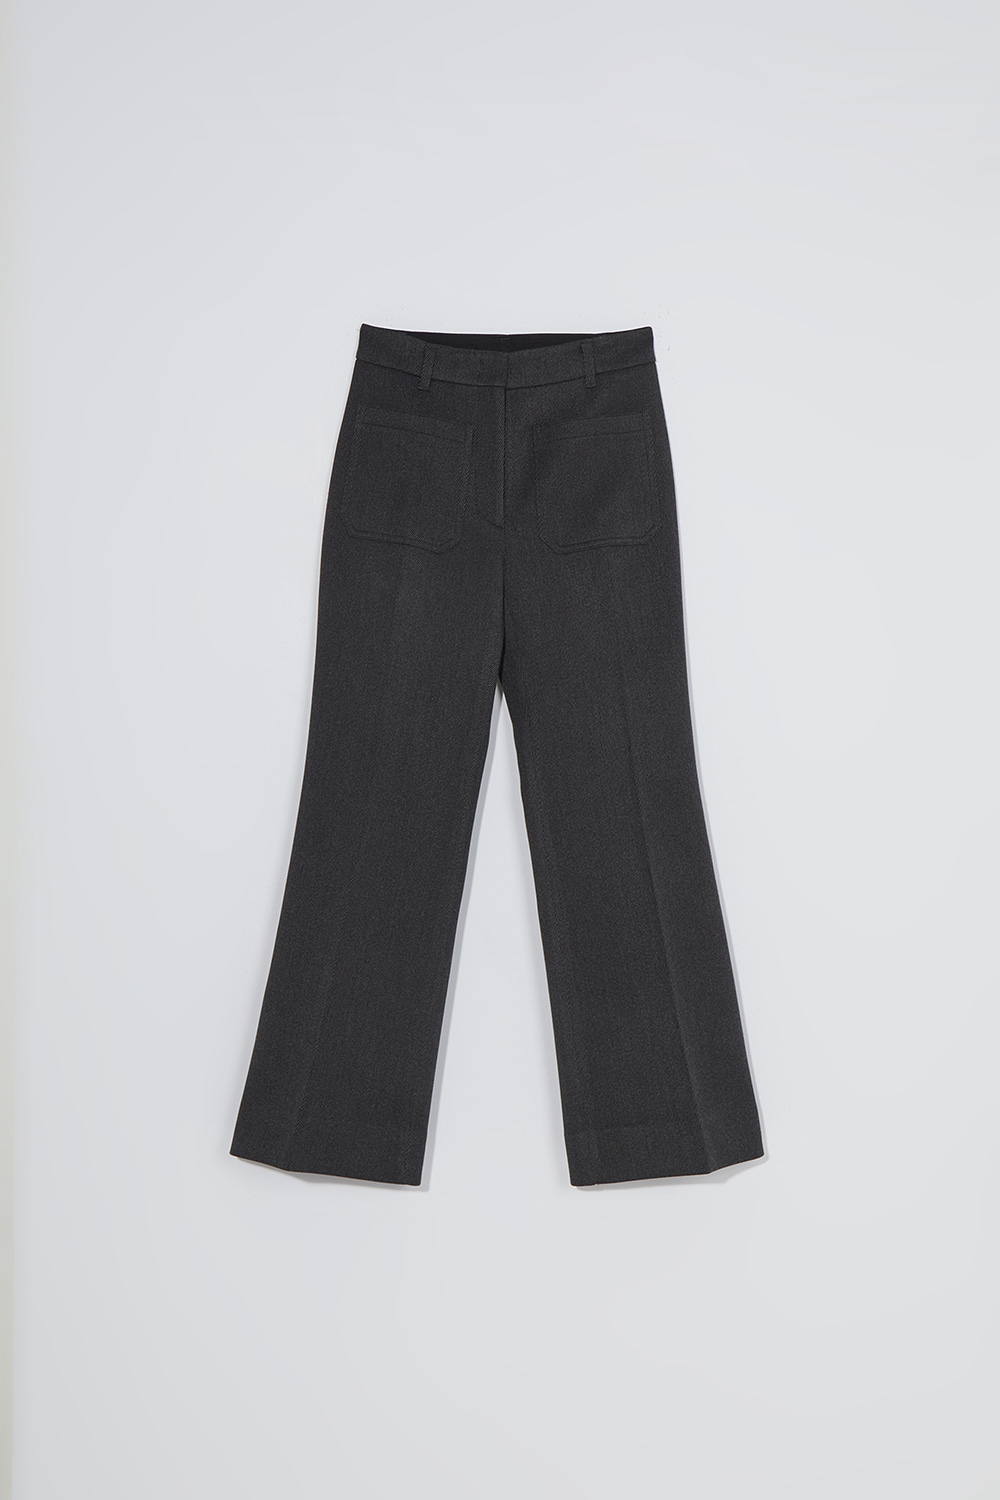 (Best Product)Pocket detail pants_dark gray